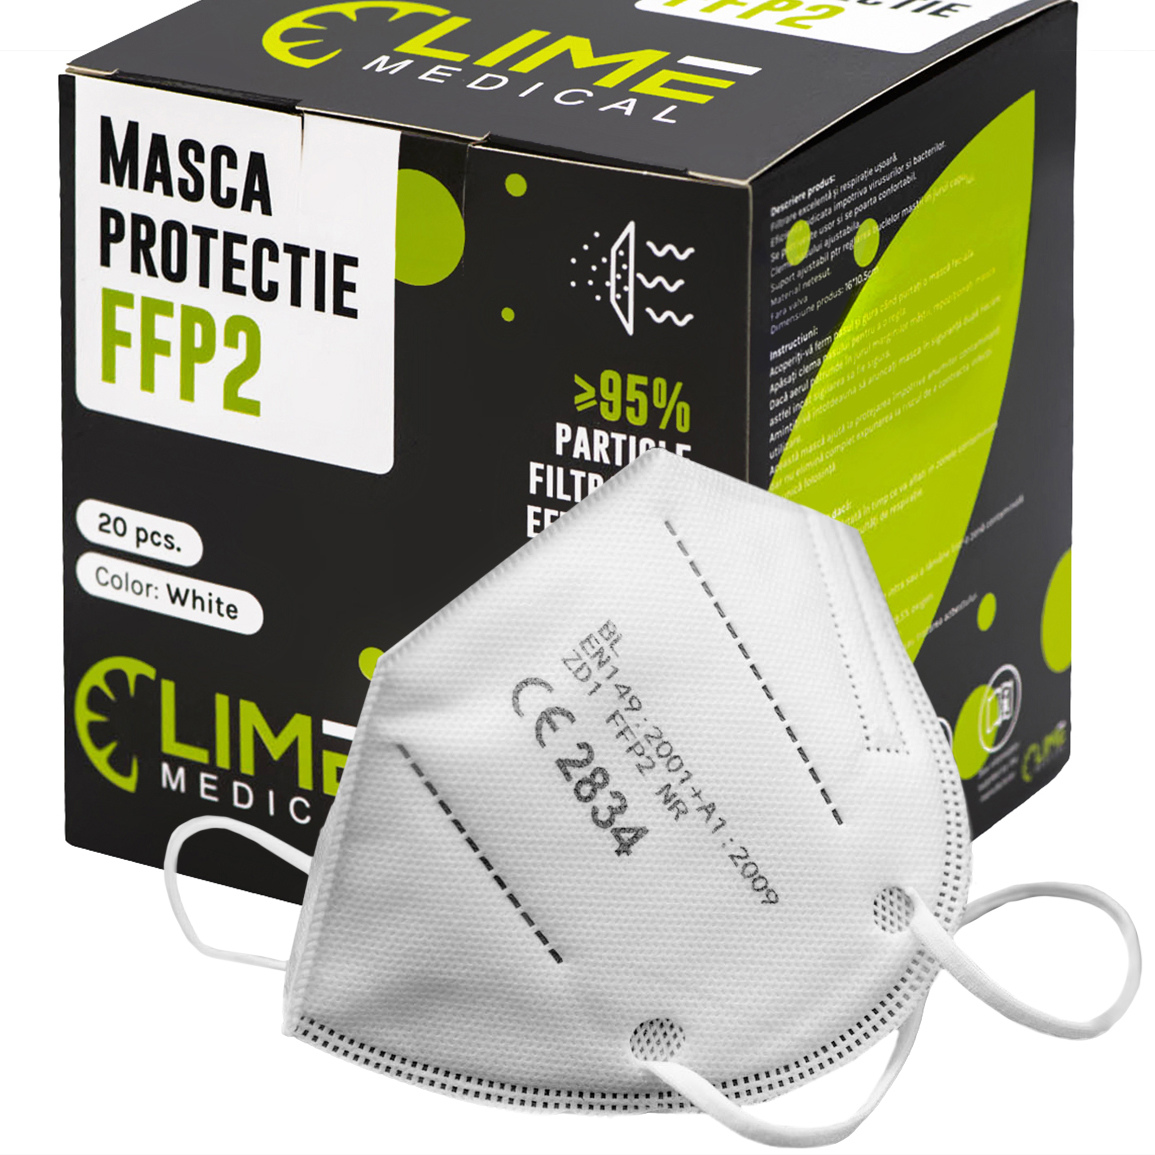 Masca protectie FFP2 fara valva ptr. filtrarea particulelor, 20 bucati, Lime Medical, alb 1